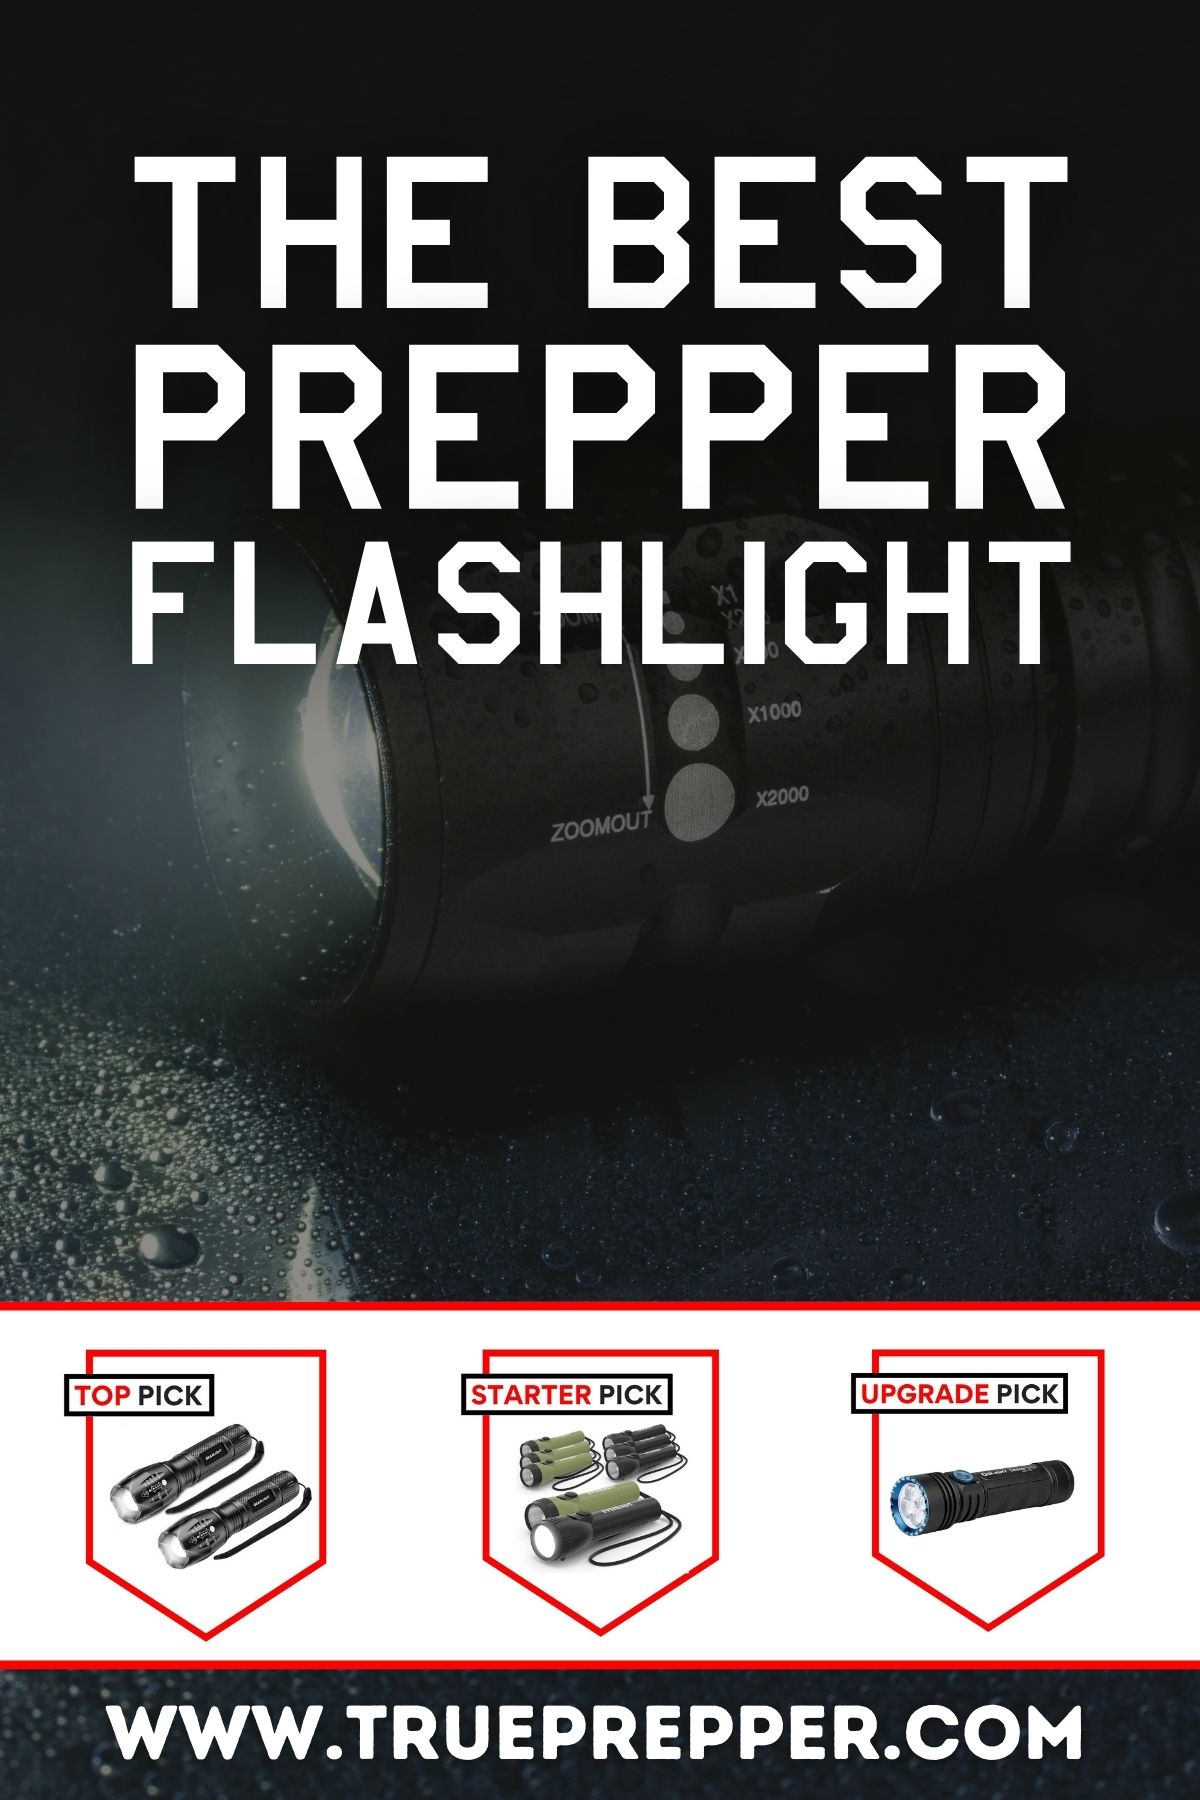 Modular Survivalist Flashlights : survival flashlight